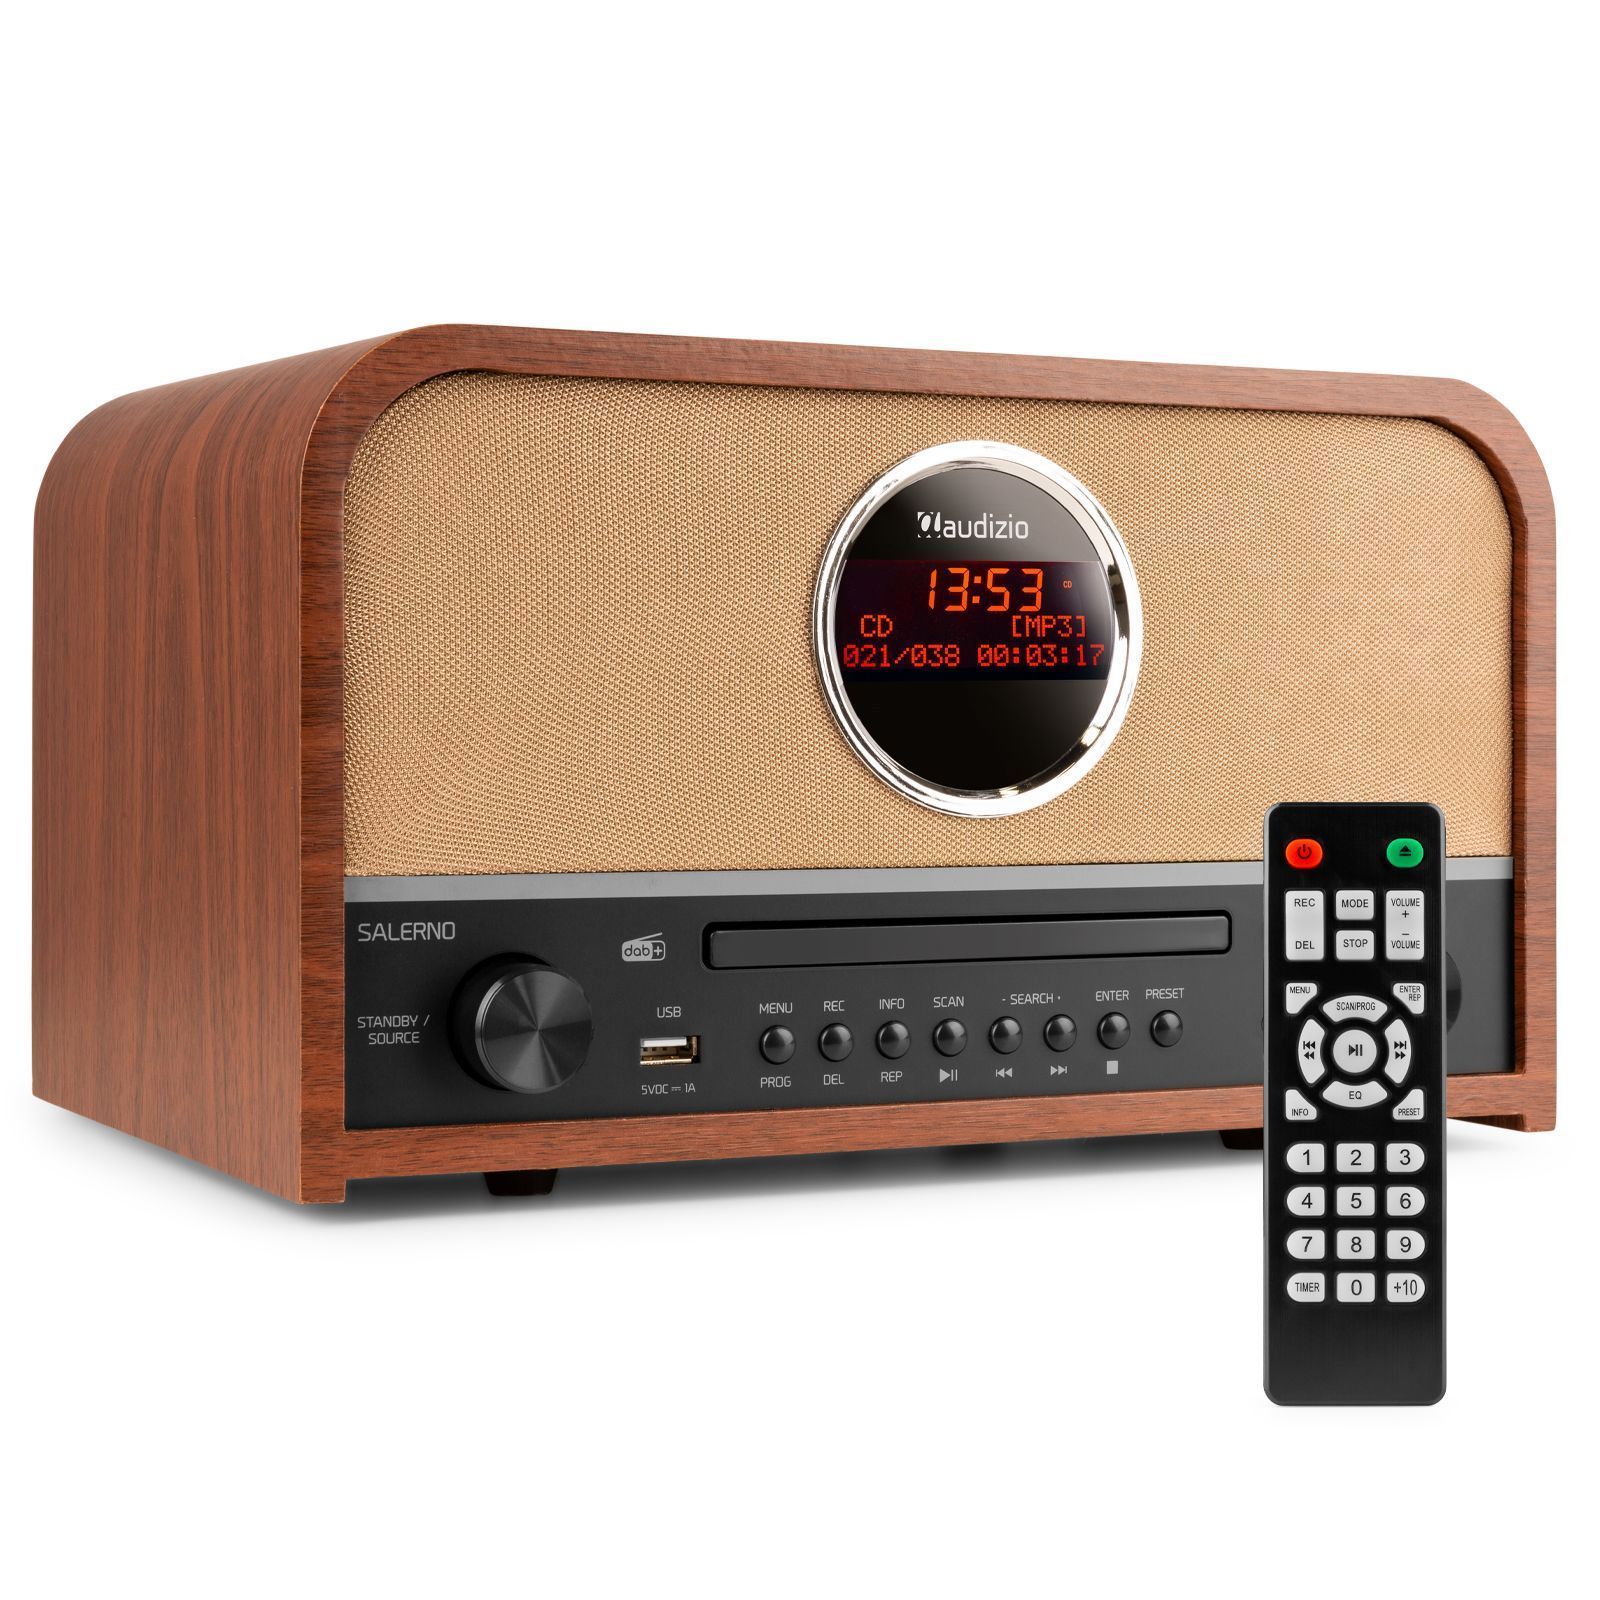 Audizio Salerno stereo DAB-radio med CD-spelare, Bluetooth och MP3-spelare